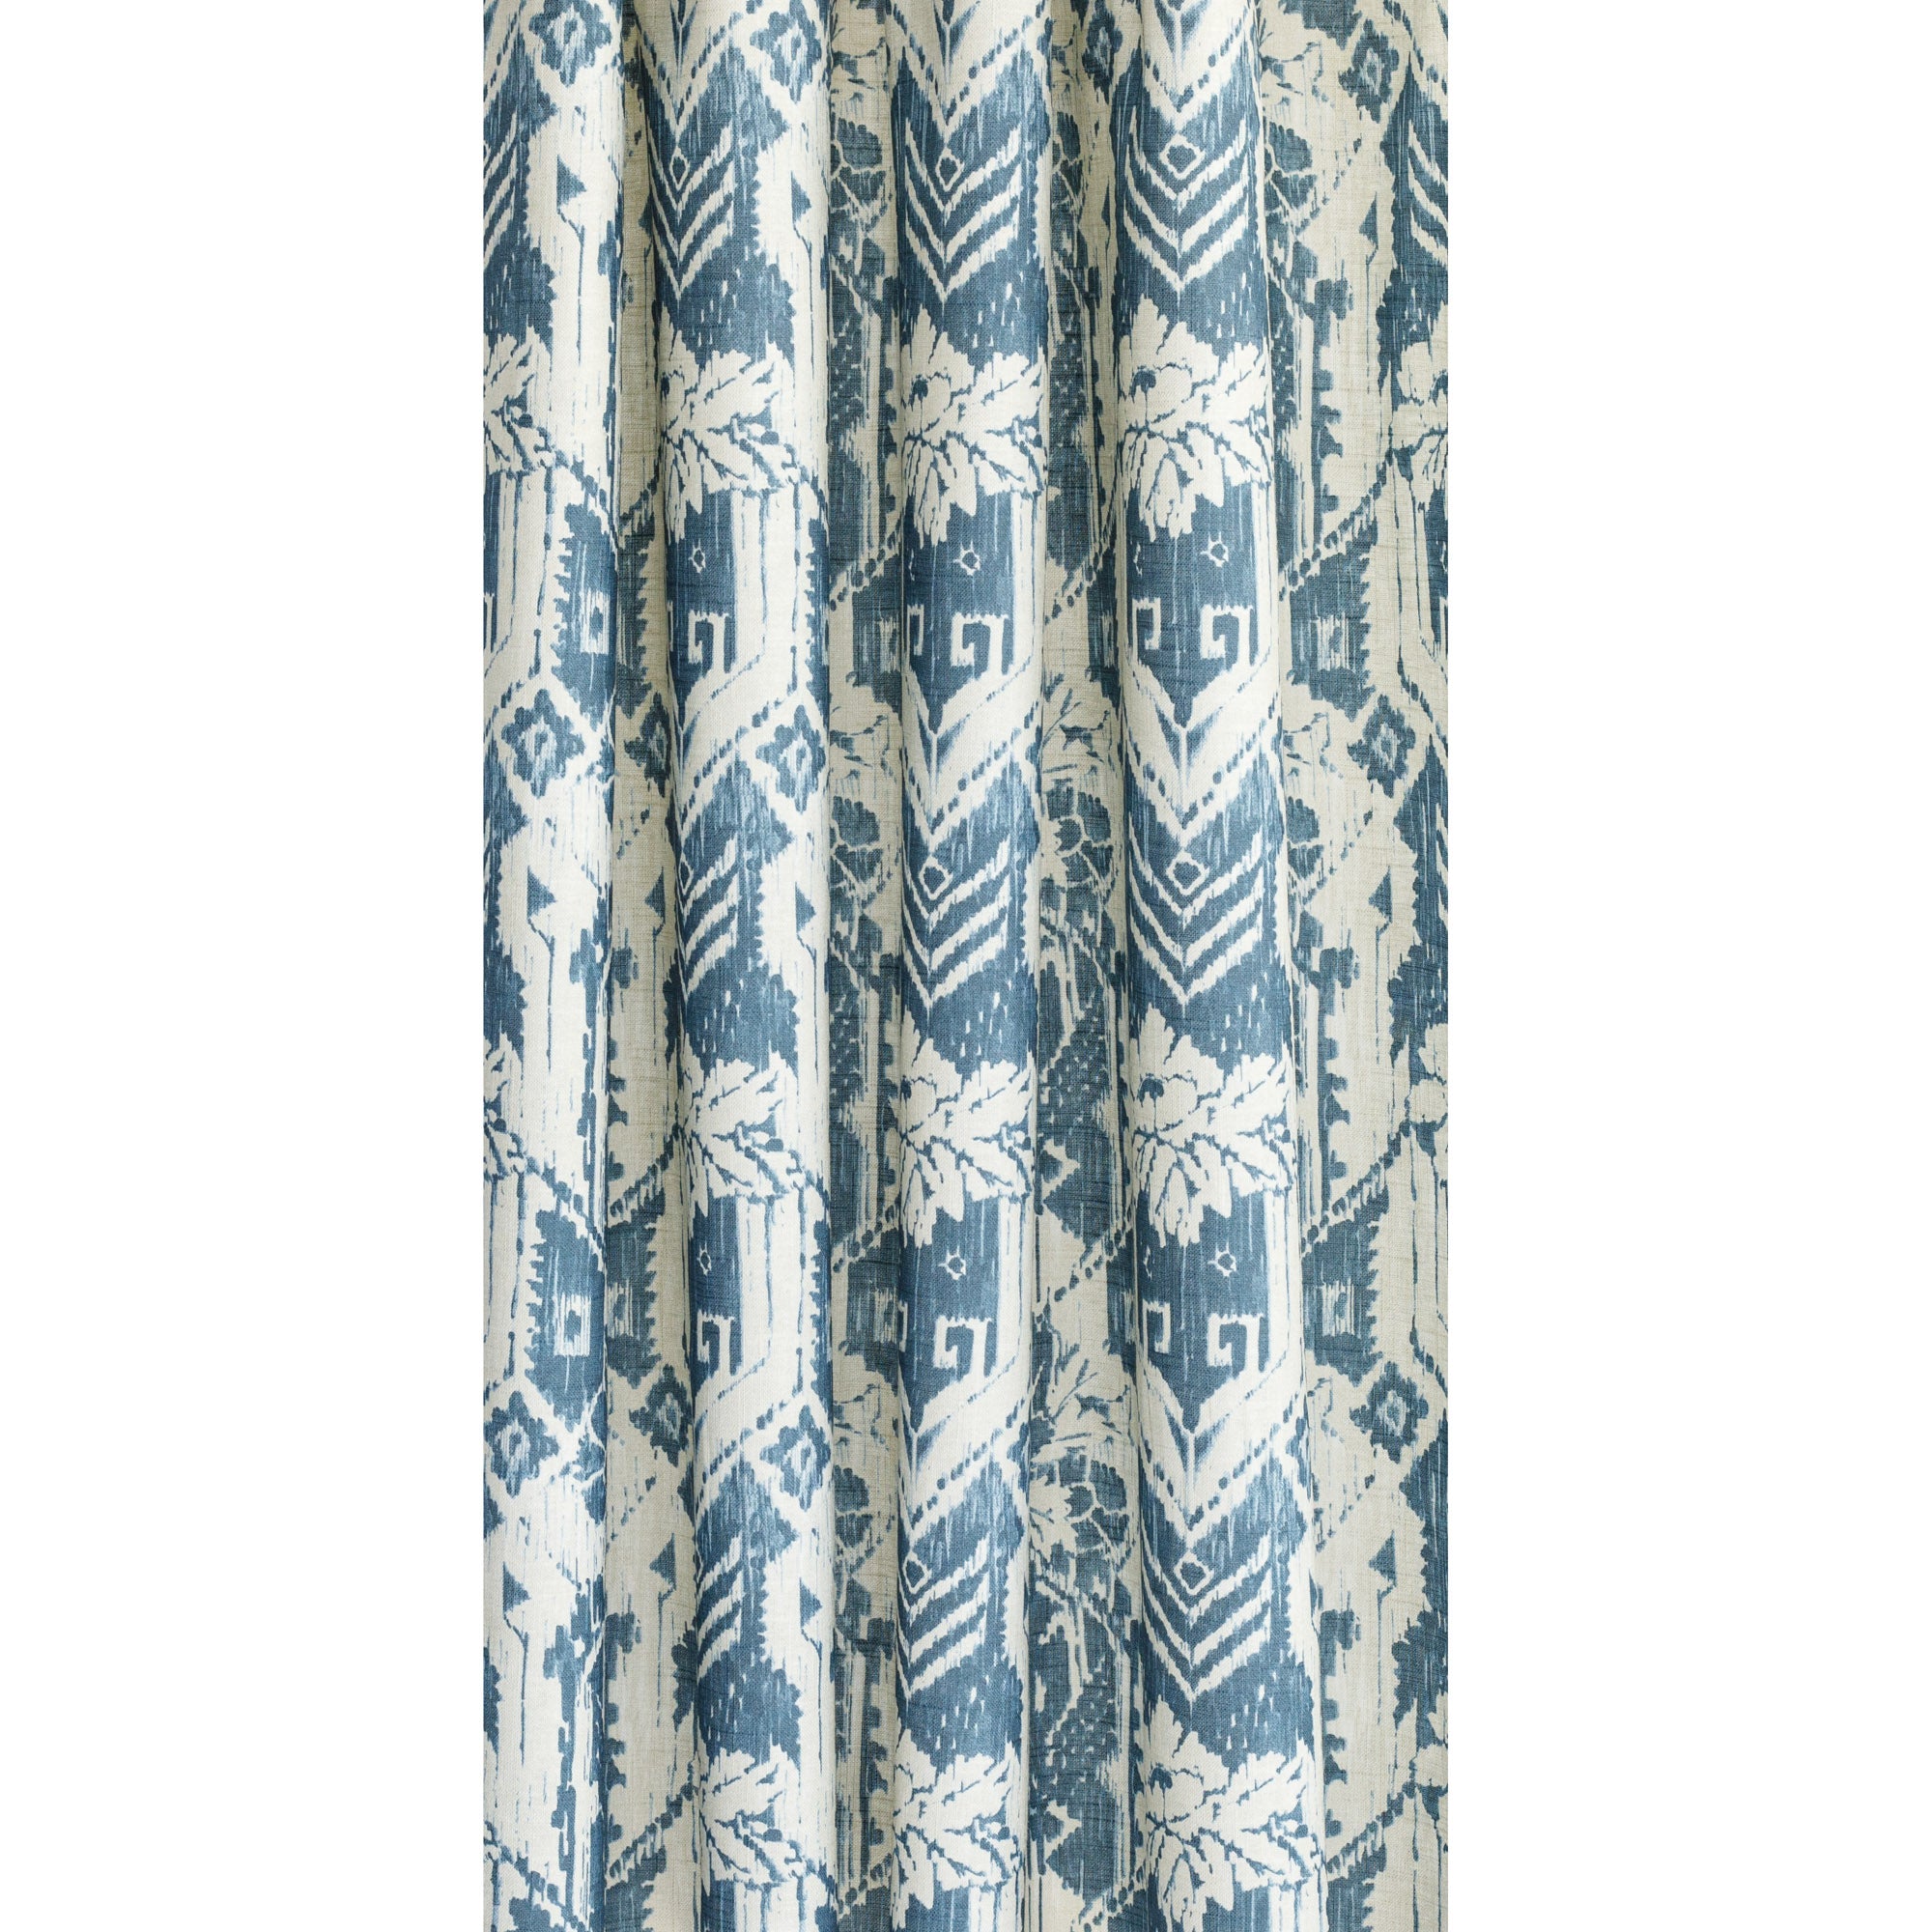 a cream and blue botanical ikat print curtain fabric